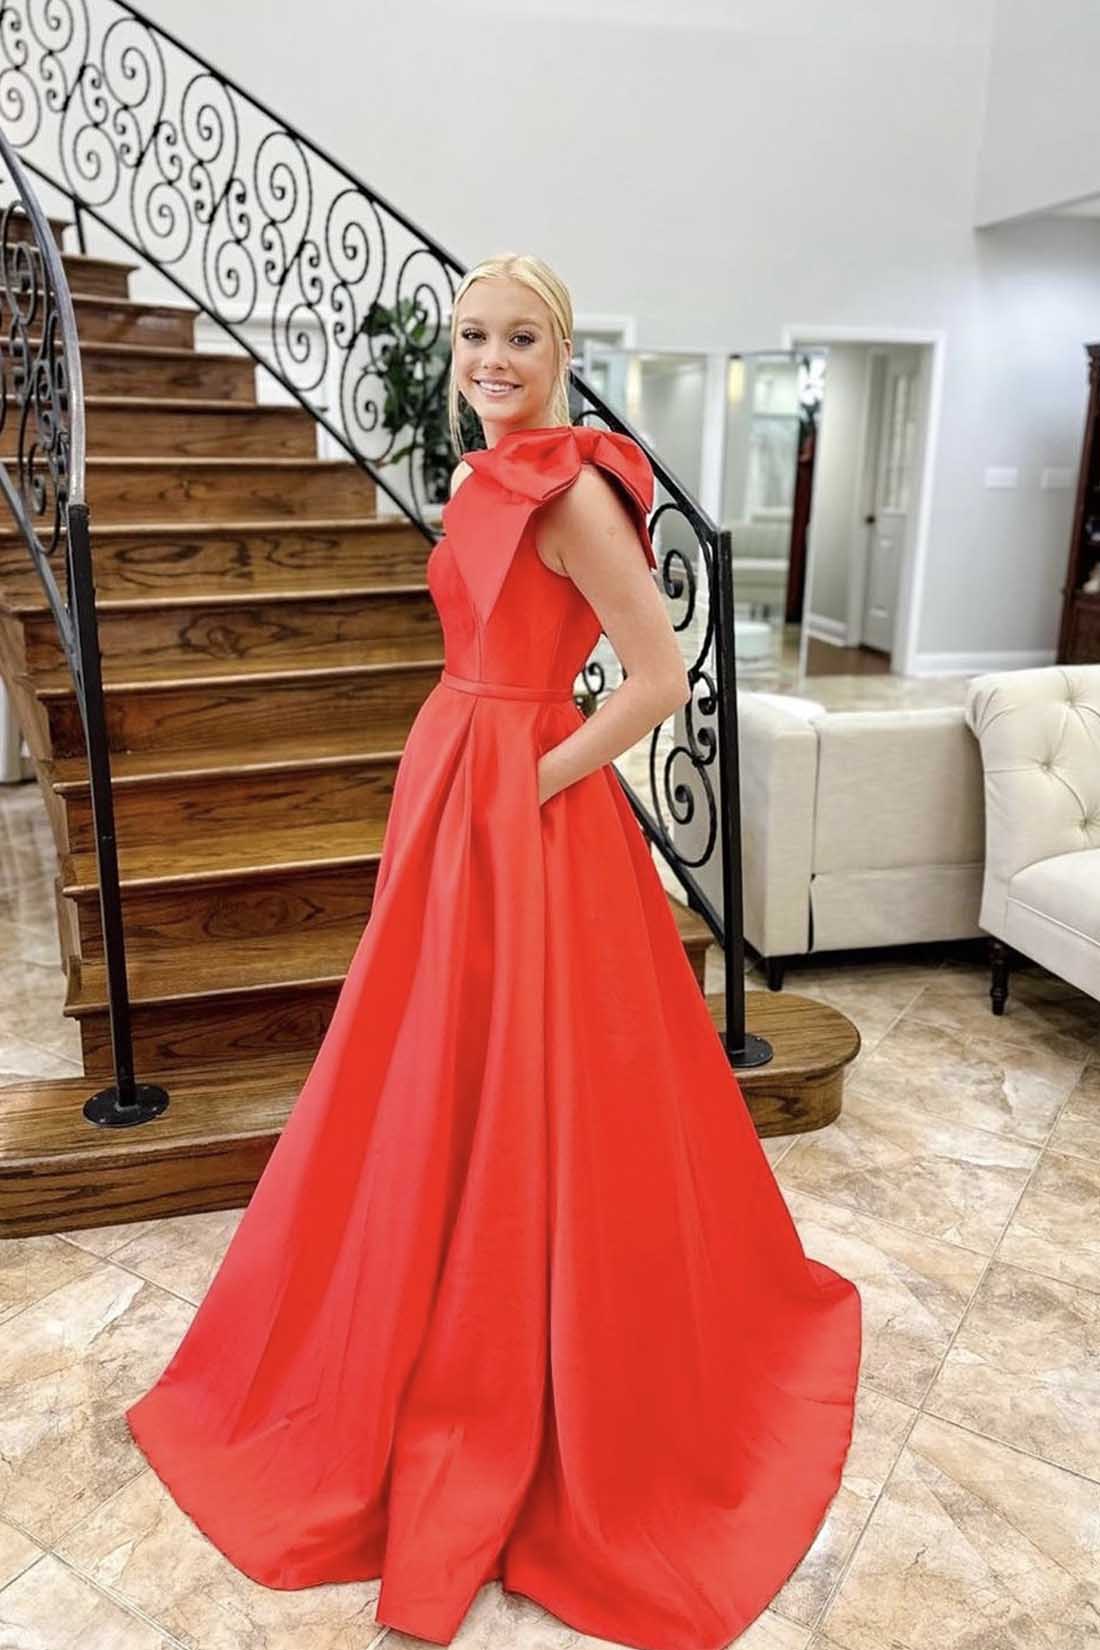 Red Satin One Shoulder Floor Length Prom Dress, Red A-Line Formal Evening Dress